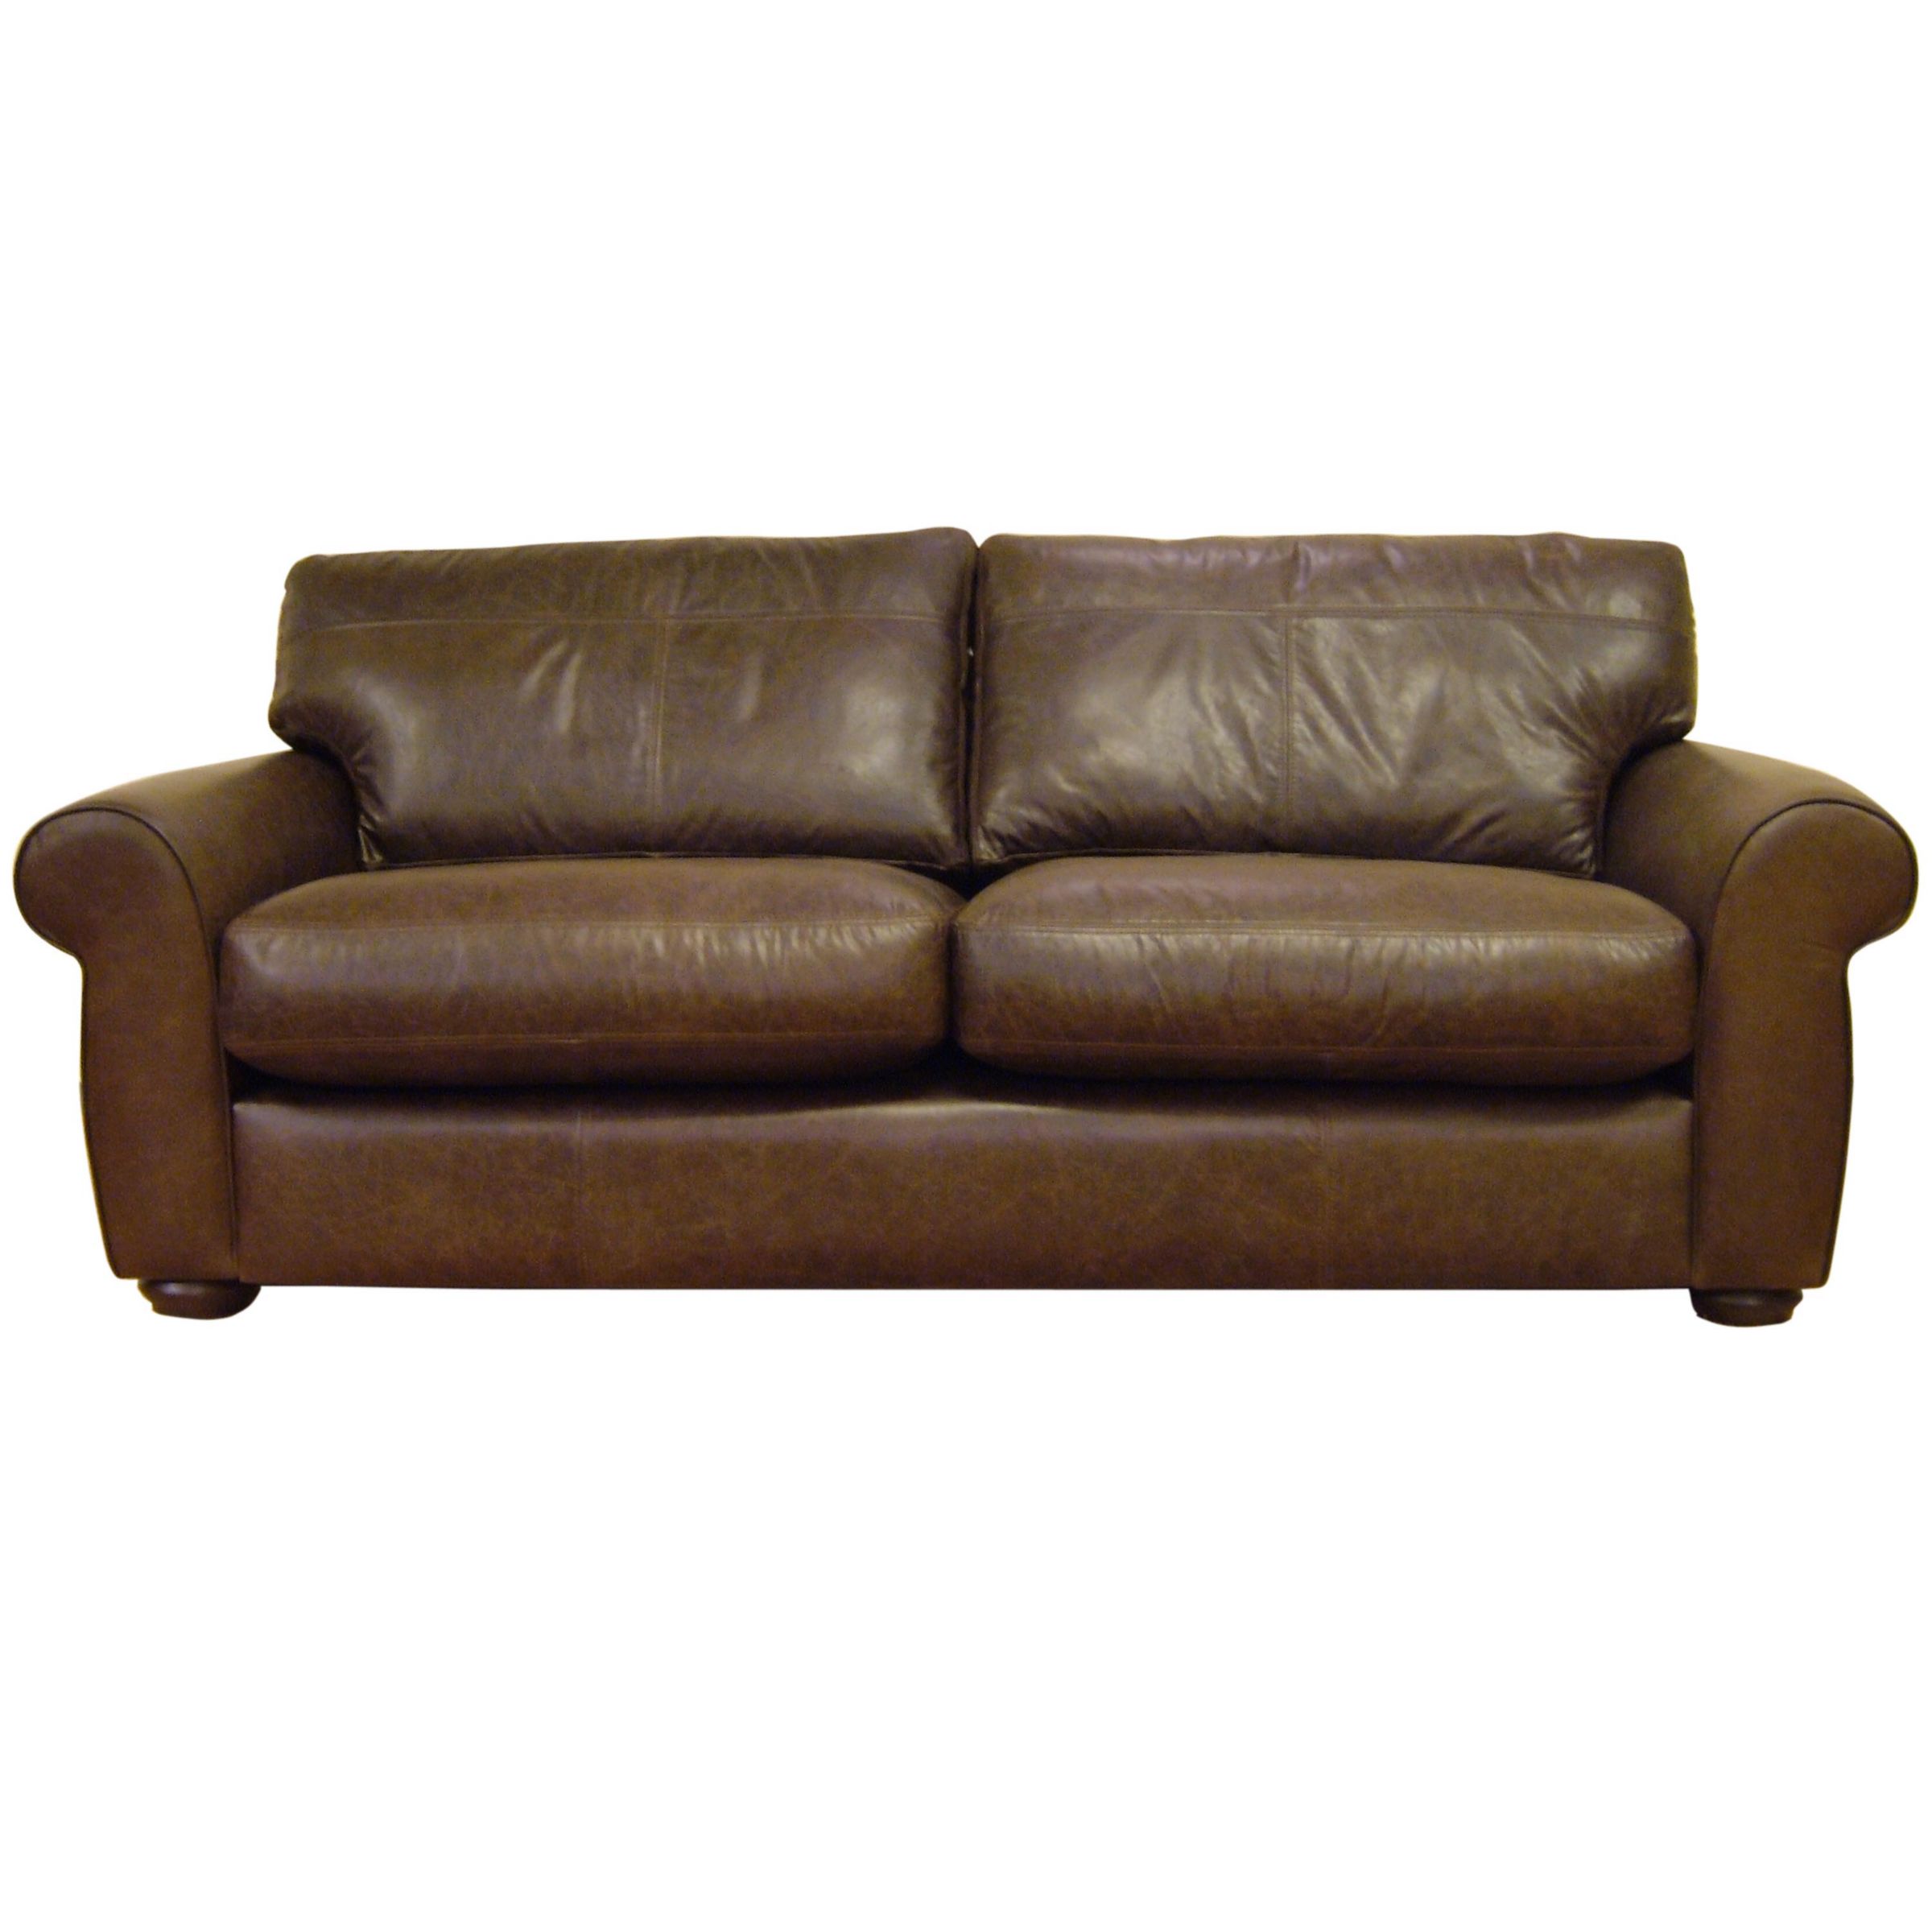 John Lewis Madison Small Cushion Back Leather Sofa, Chocolate, width 172cm